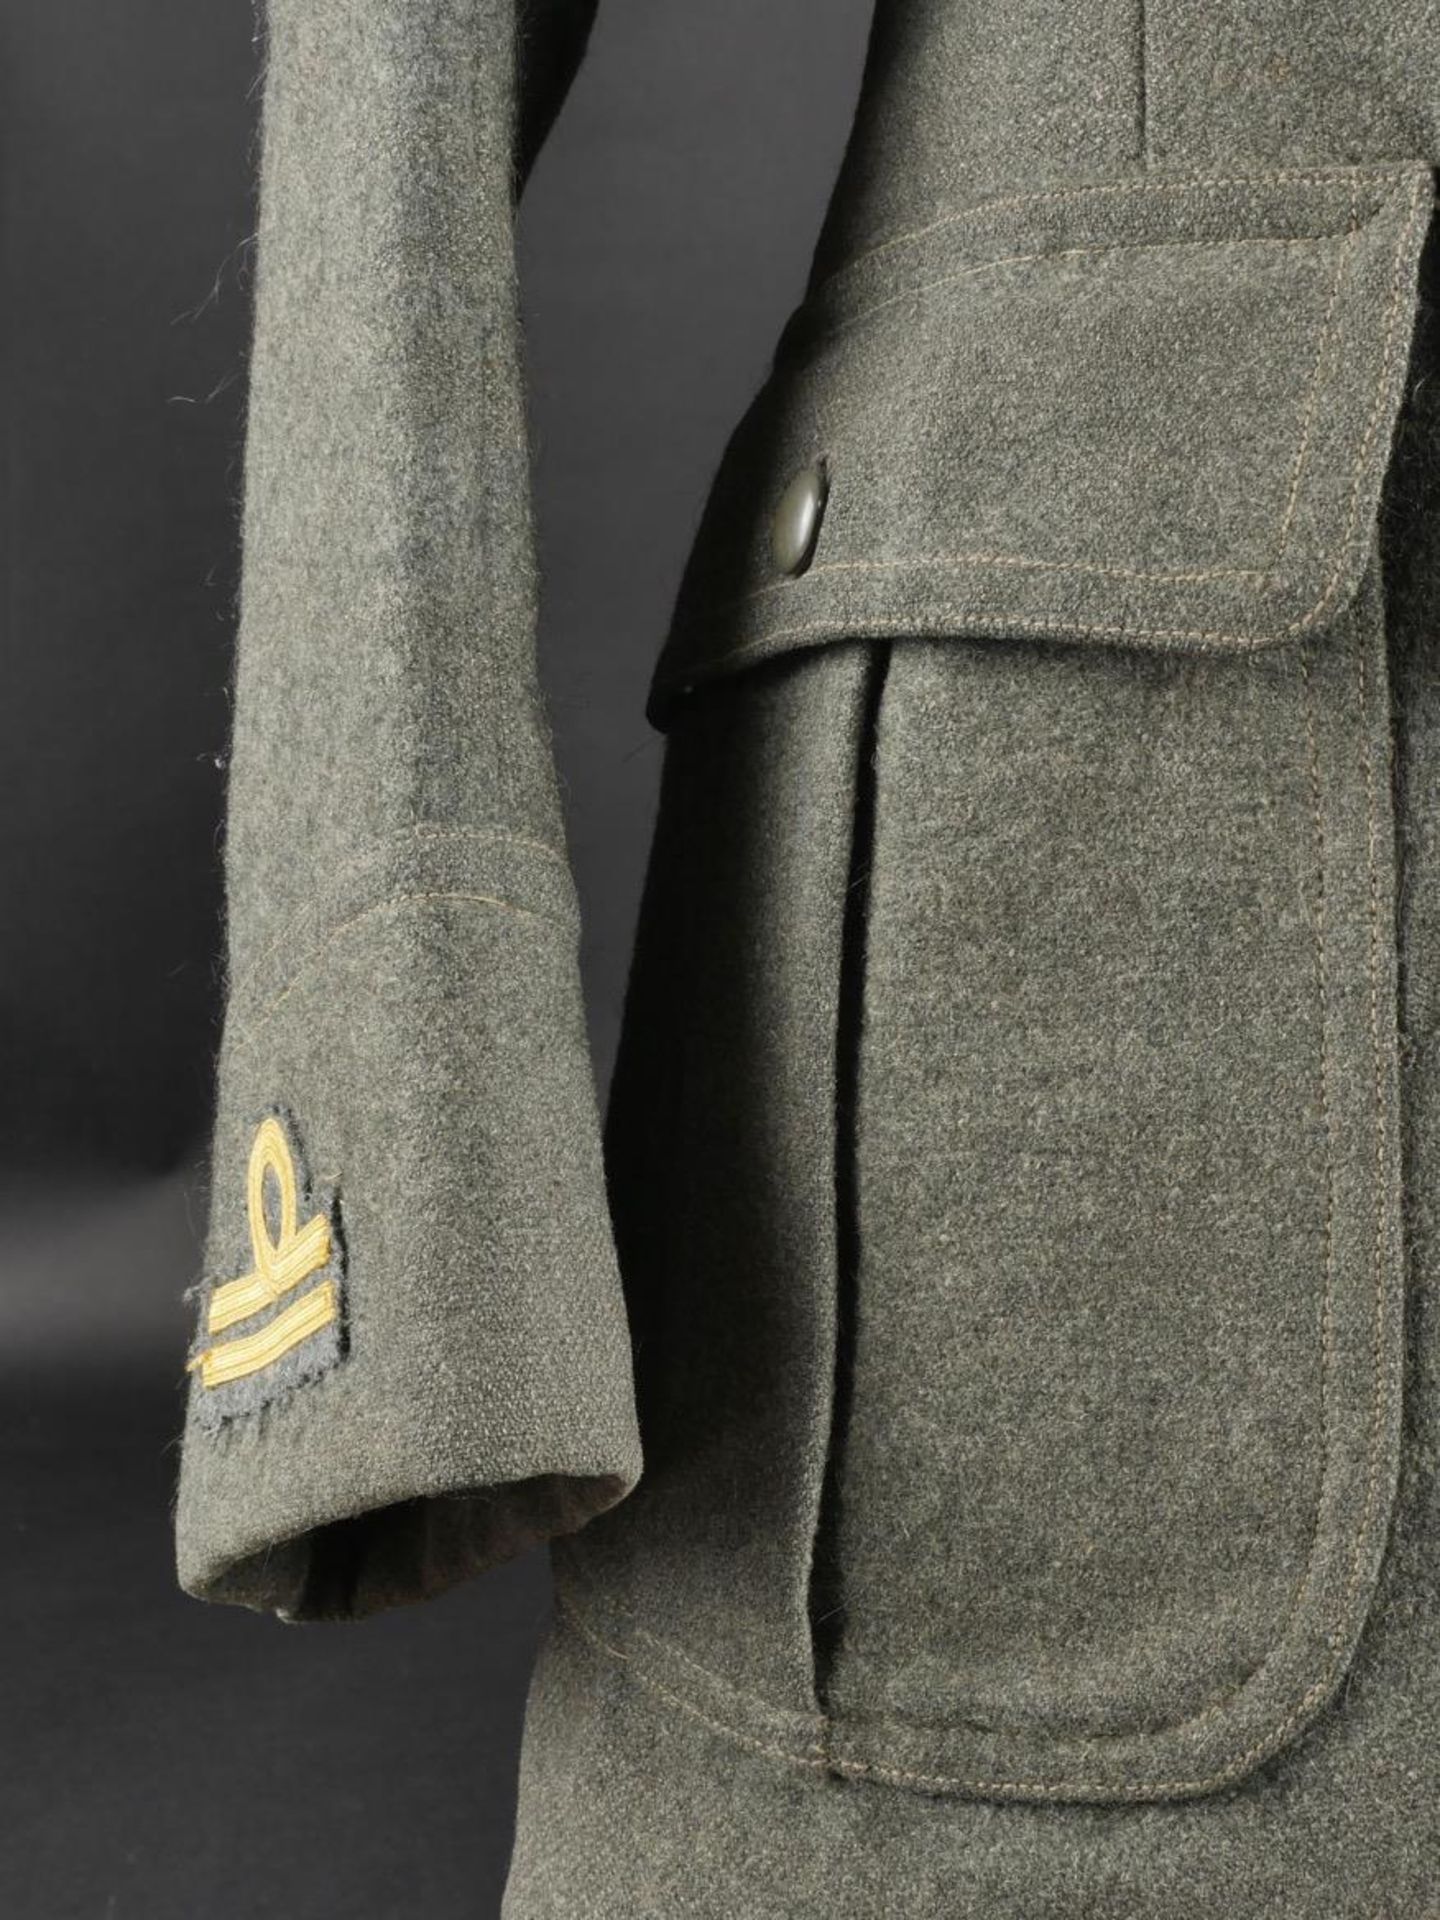 Vareuse de Lieutenant de la division Messina. Messina Division Lieutenant s jacket. - Image 3 of 19